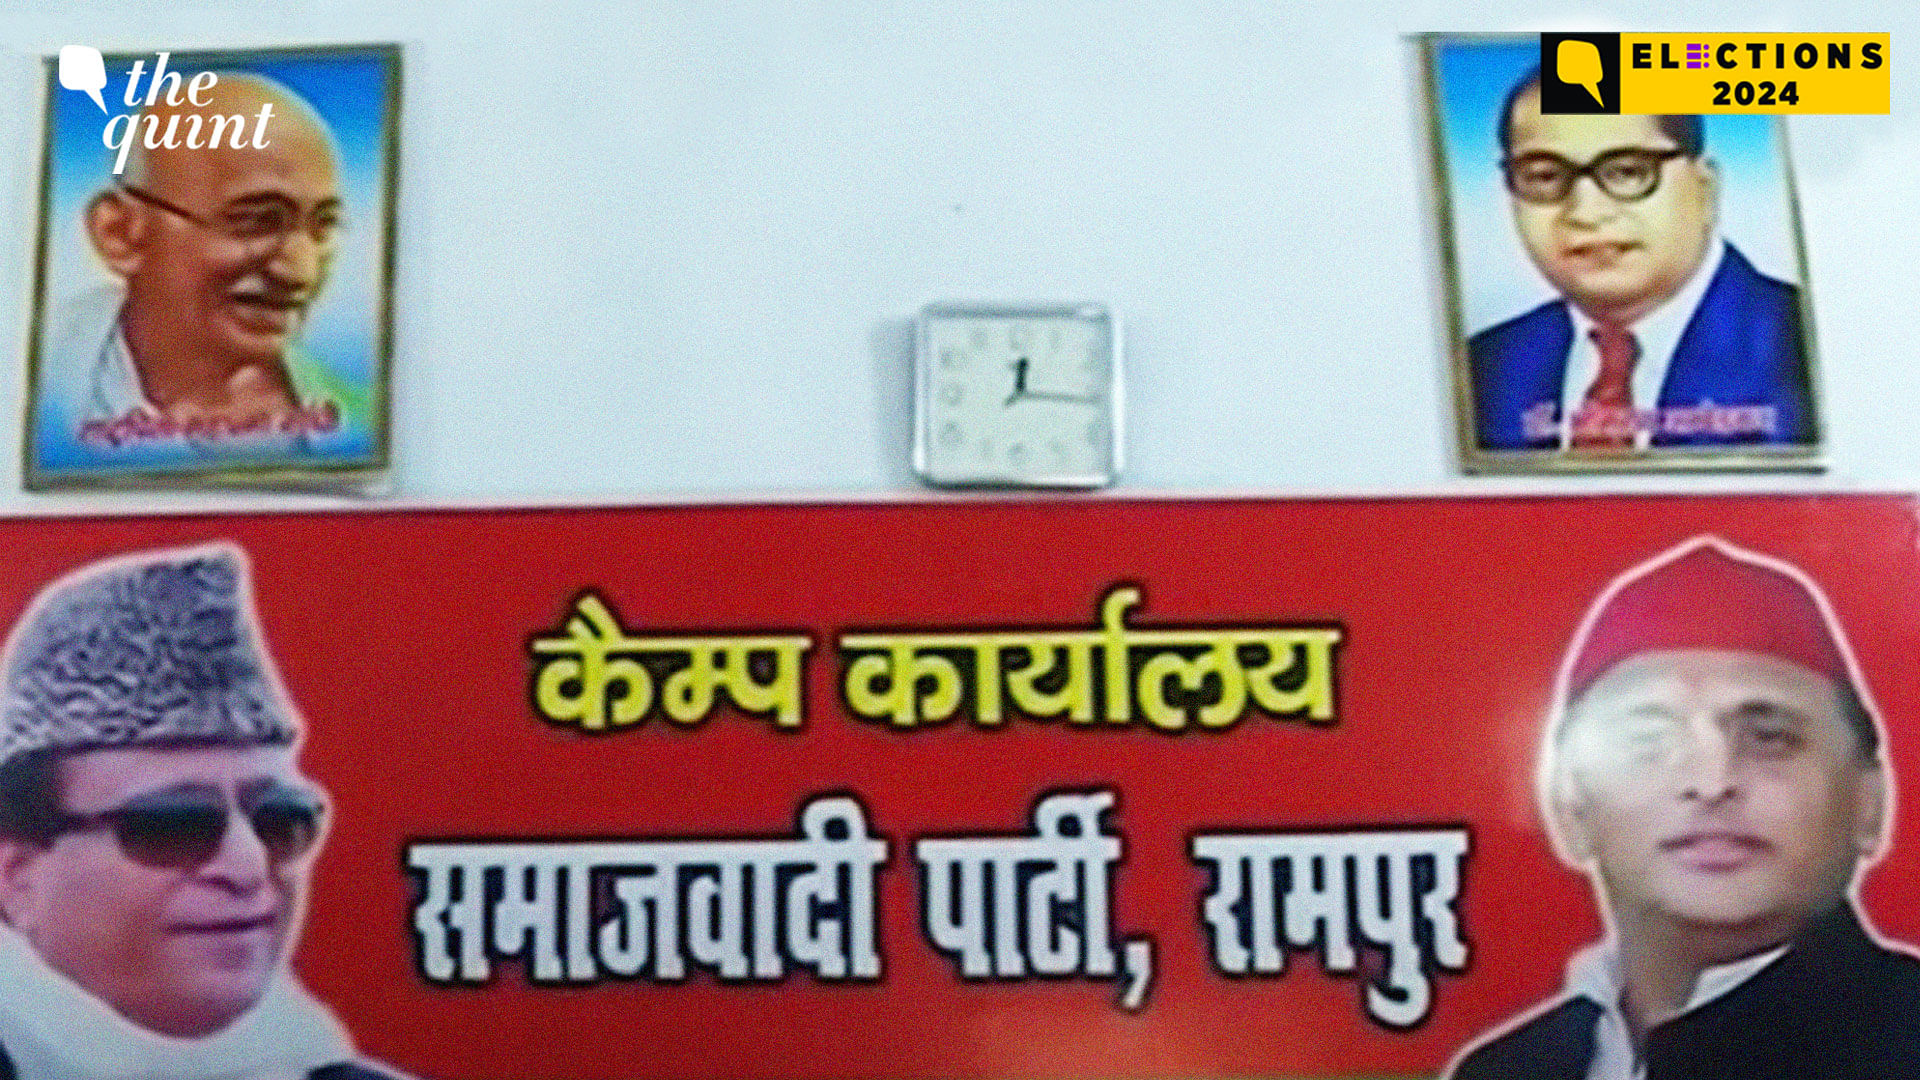 <div class="paragraphs"><p>Samajwadi Party's Rampur office has a banner with Azam Khan's photograph next to Akhilesh Yadav's.</p></div>